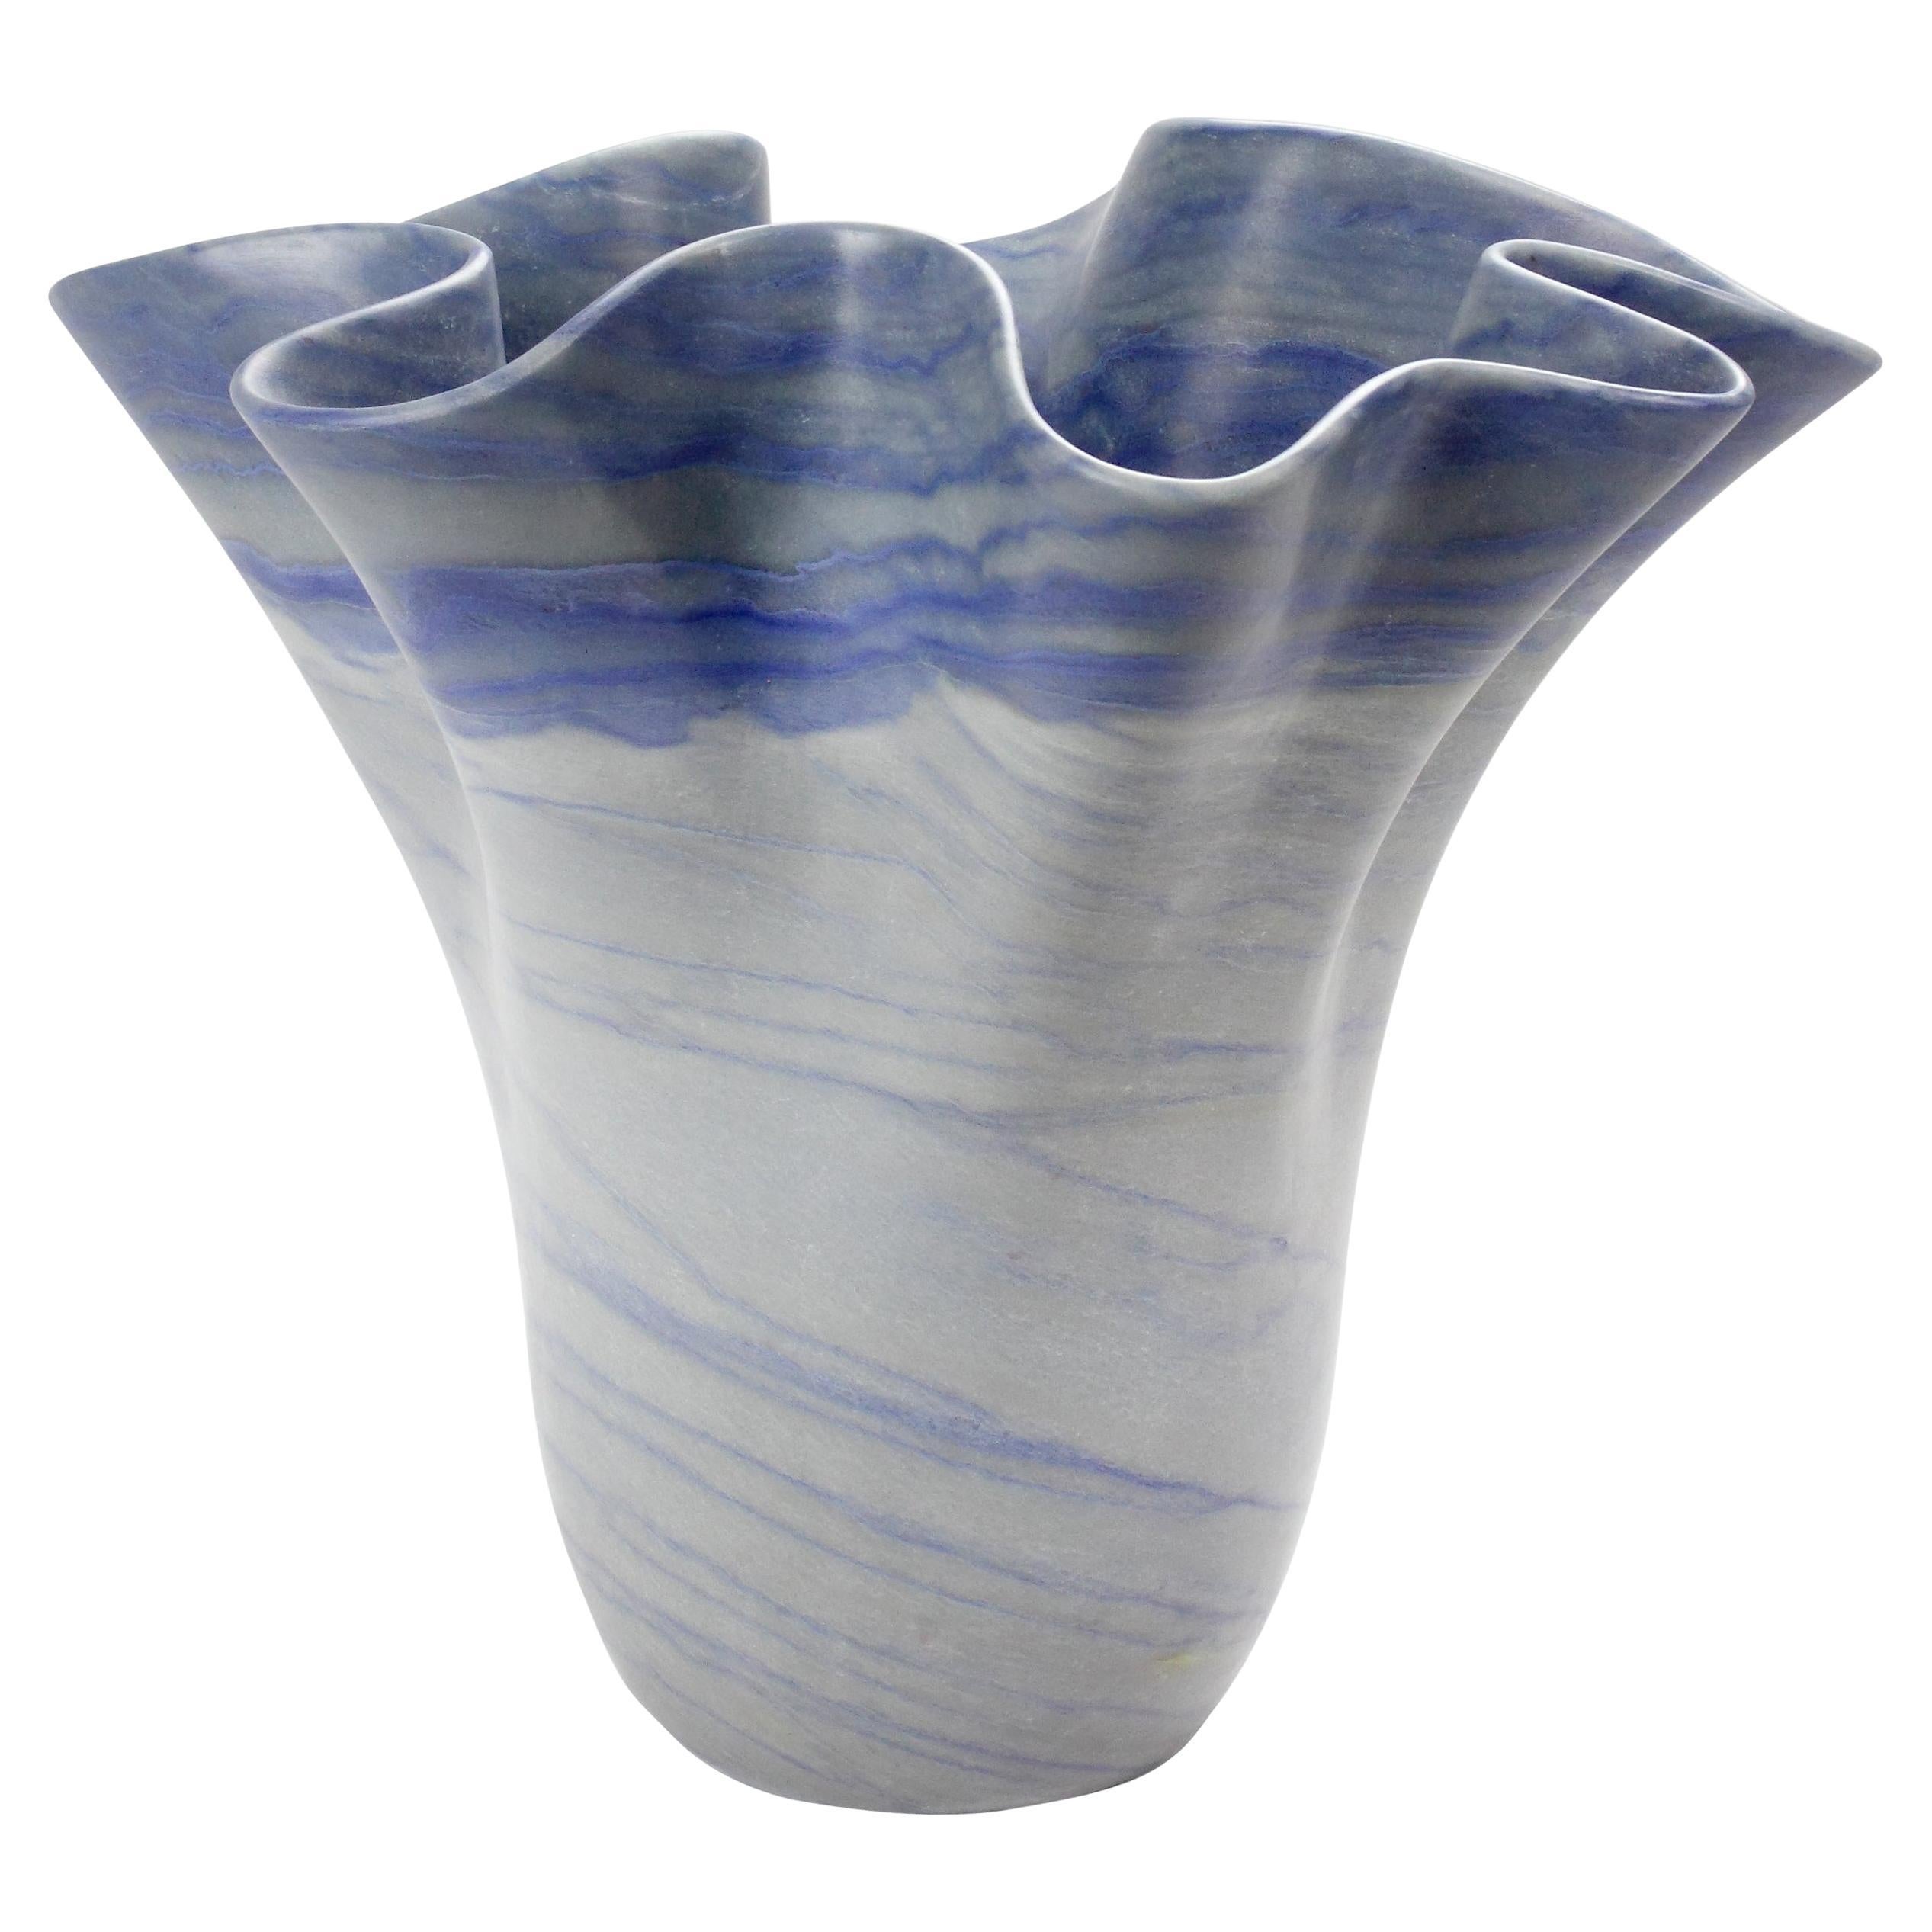 Vase/Gefäß-Skulptur in organischer Form aus massivem Azul-Marmor, Sammlerstück